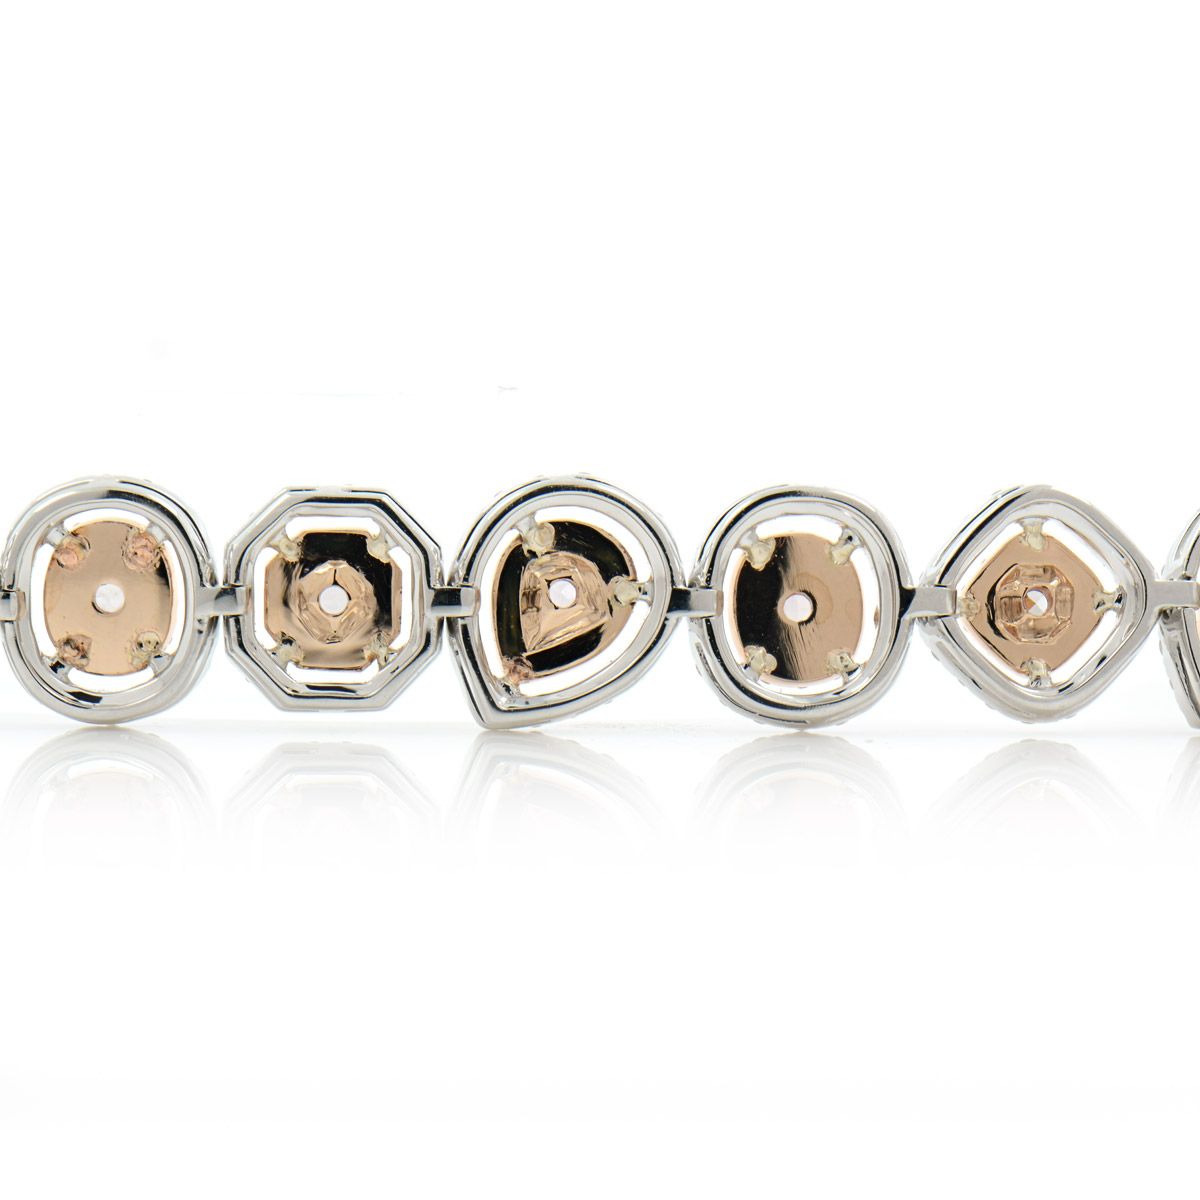 Fancy Pink Diamond Bracelet, 2.55 Ct. (6.89 Ct. TW), Mix shape, EG_Lab Certified, J5726119435